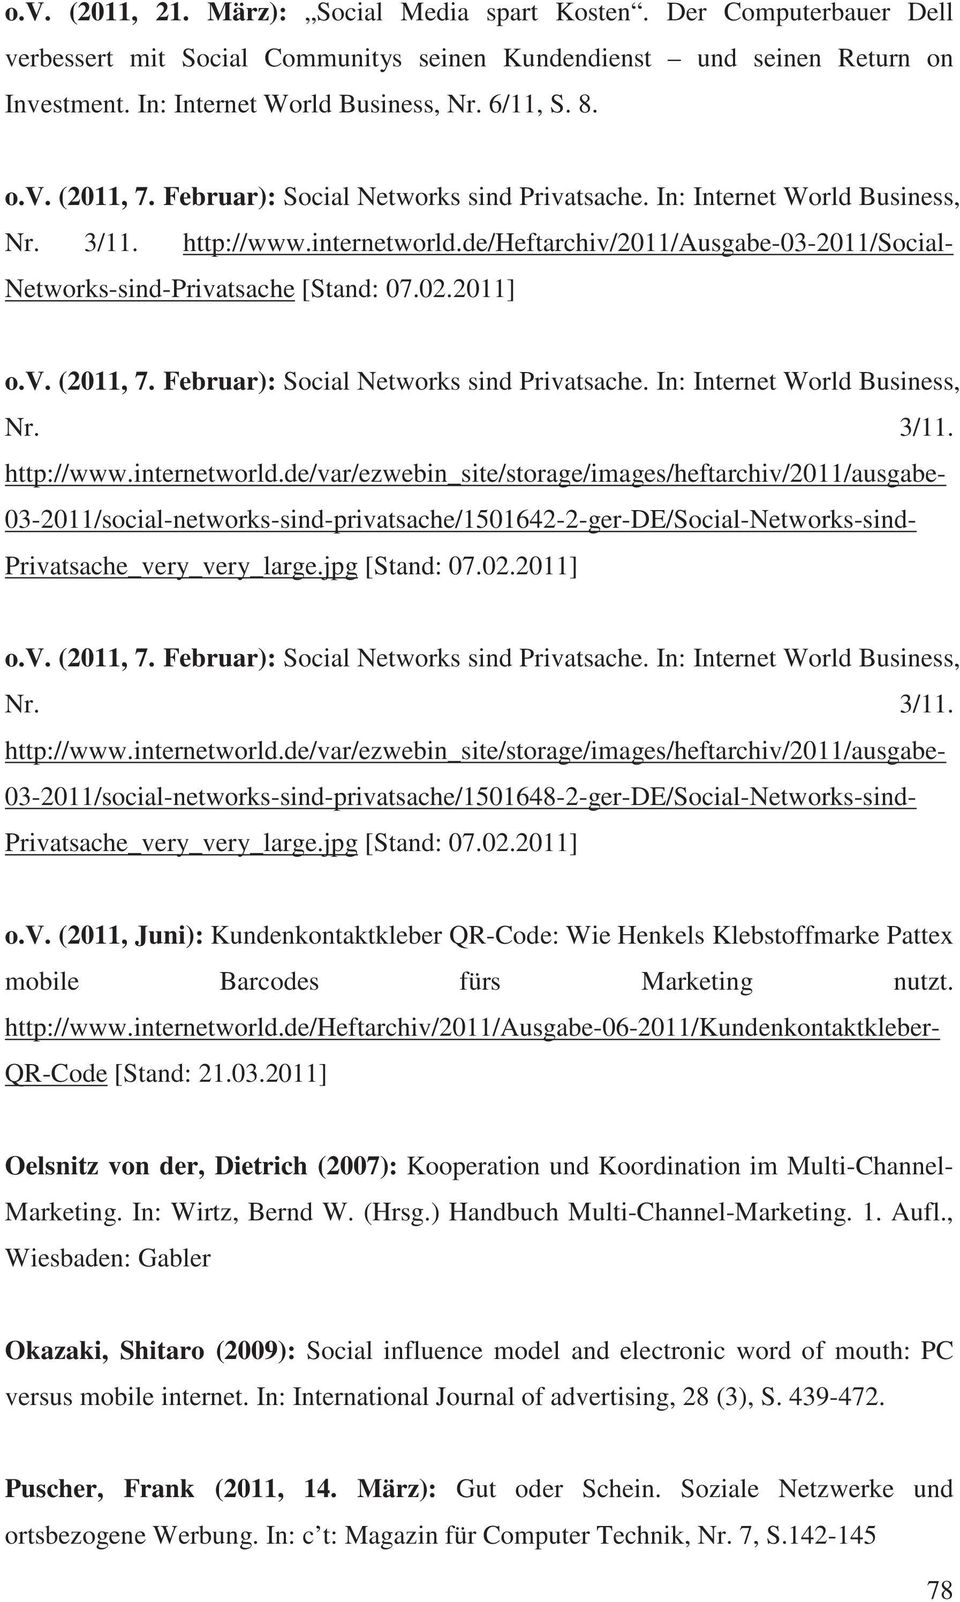 de/heftarchiv/2011/ausgabe-03-2011/social- o.v. (2011, 7. Februar): Social Networks sind Privatsache. In: Internet World Business, Nr. 3/11. http://www.internetworld.